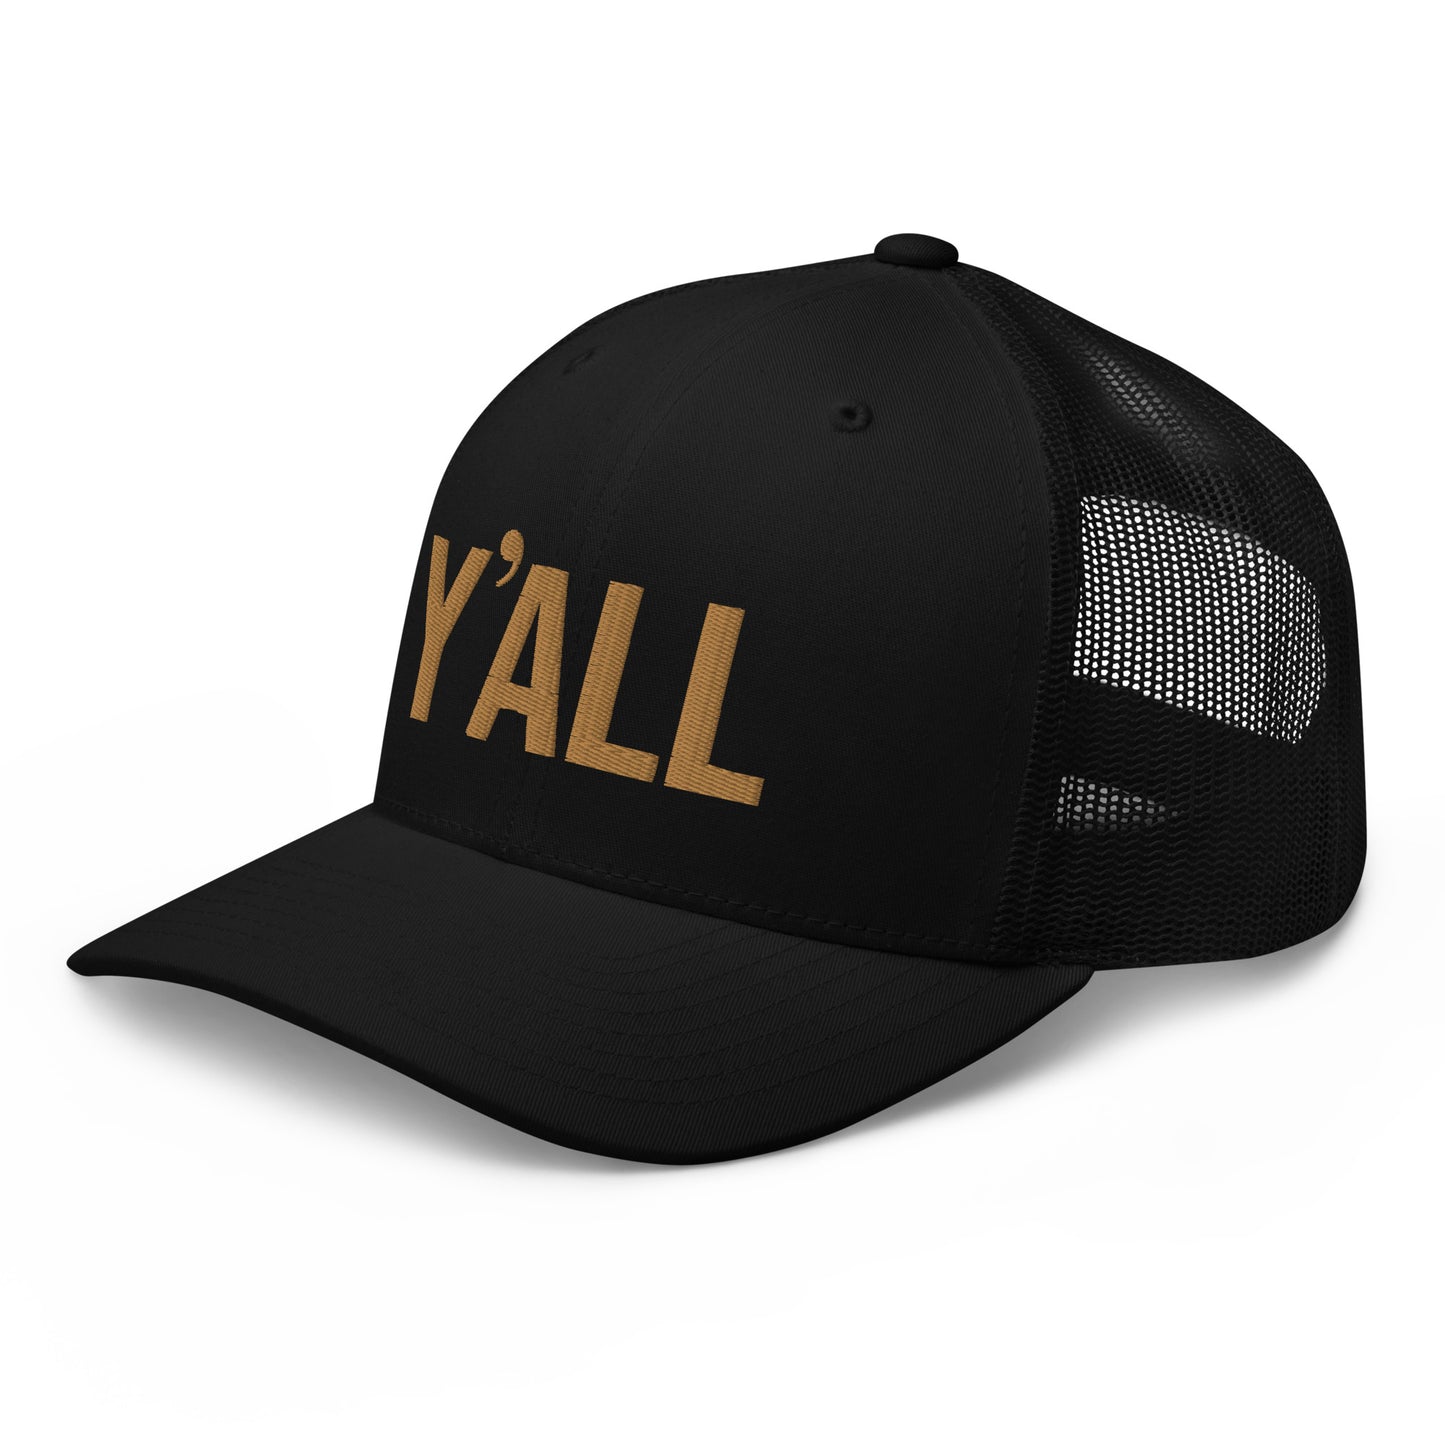 Y'all Trucker Hat